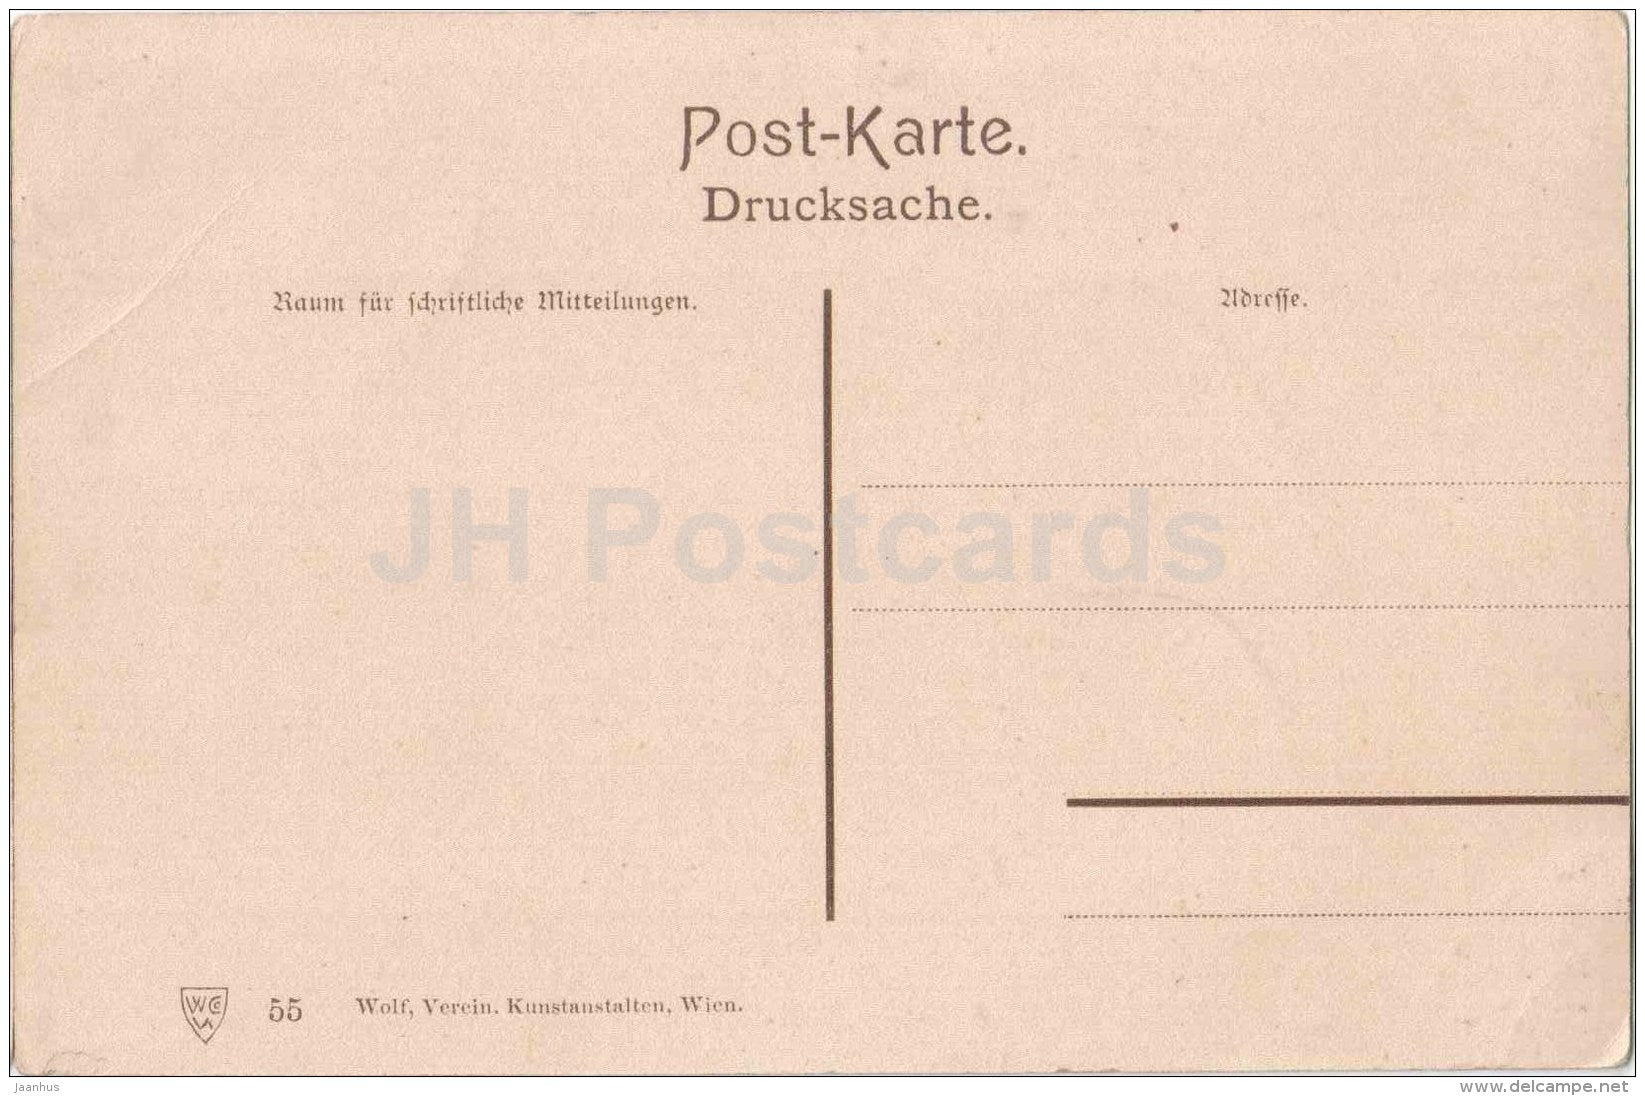 Pestsaule am Graben - Wien - Vienna - Austria - 55 - old postcard - unused - JH Postcards